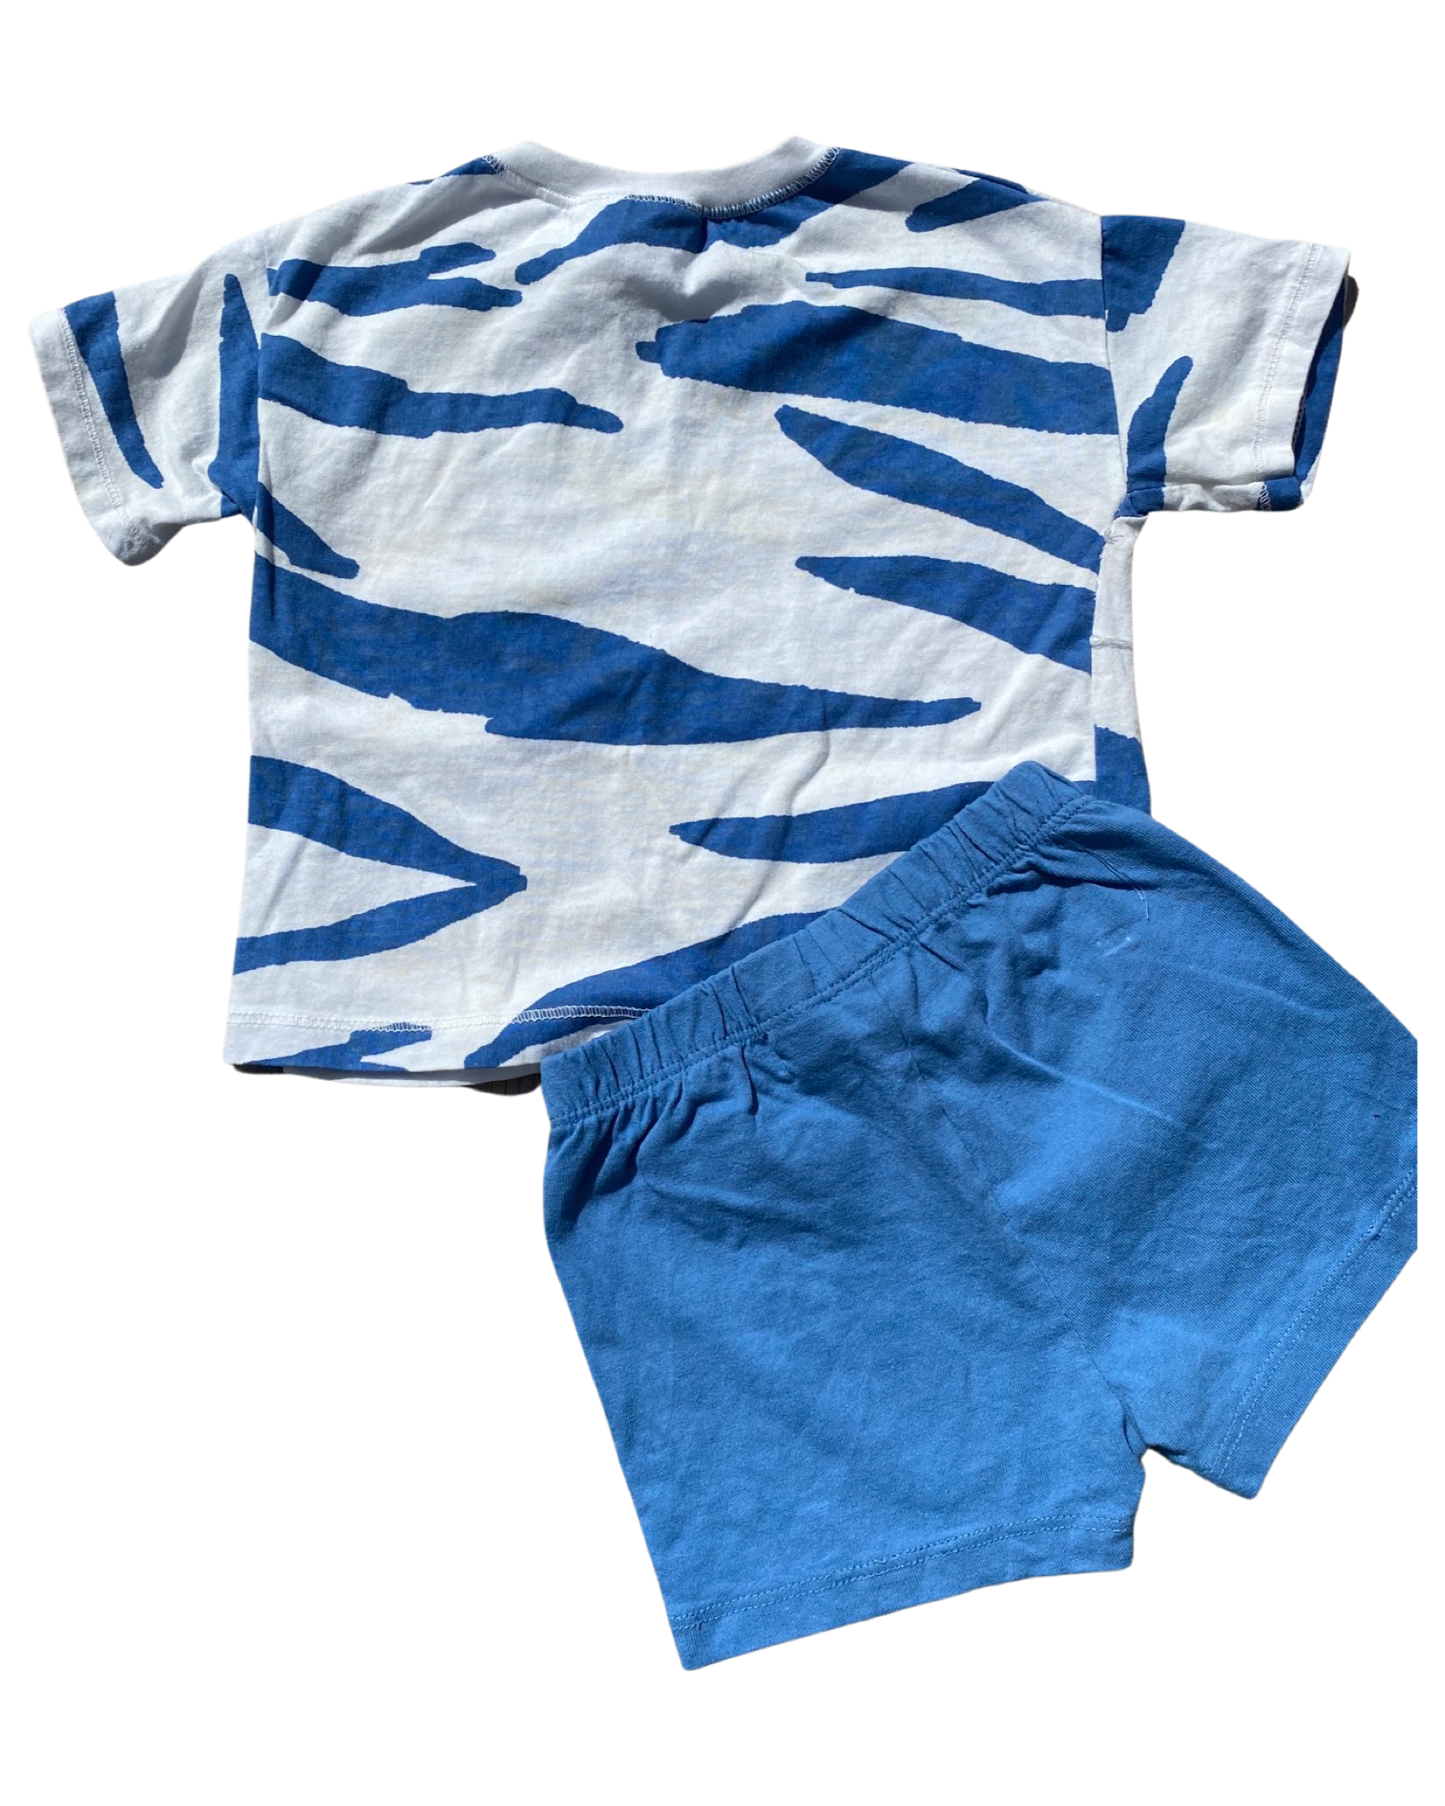 Baby Zara 'Noisy Club' 2 piece t shirt & shorts set (9-12mths)